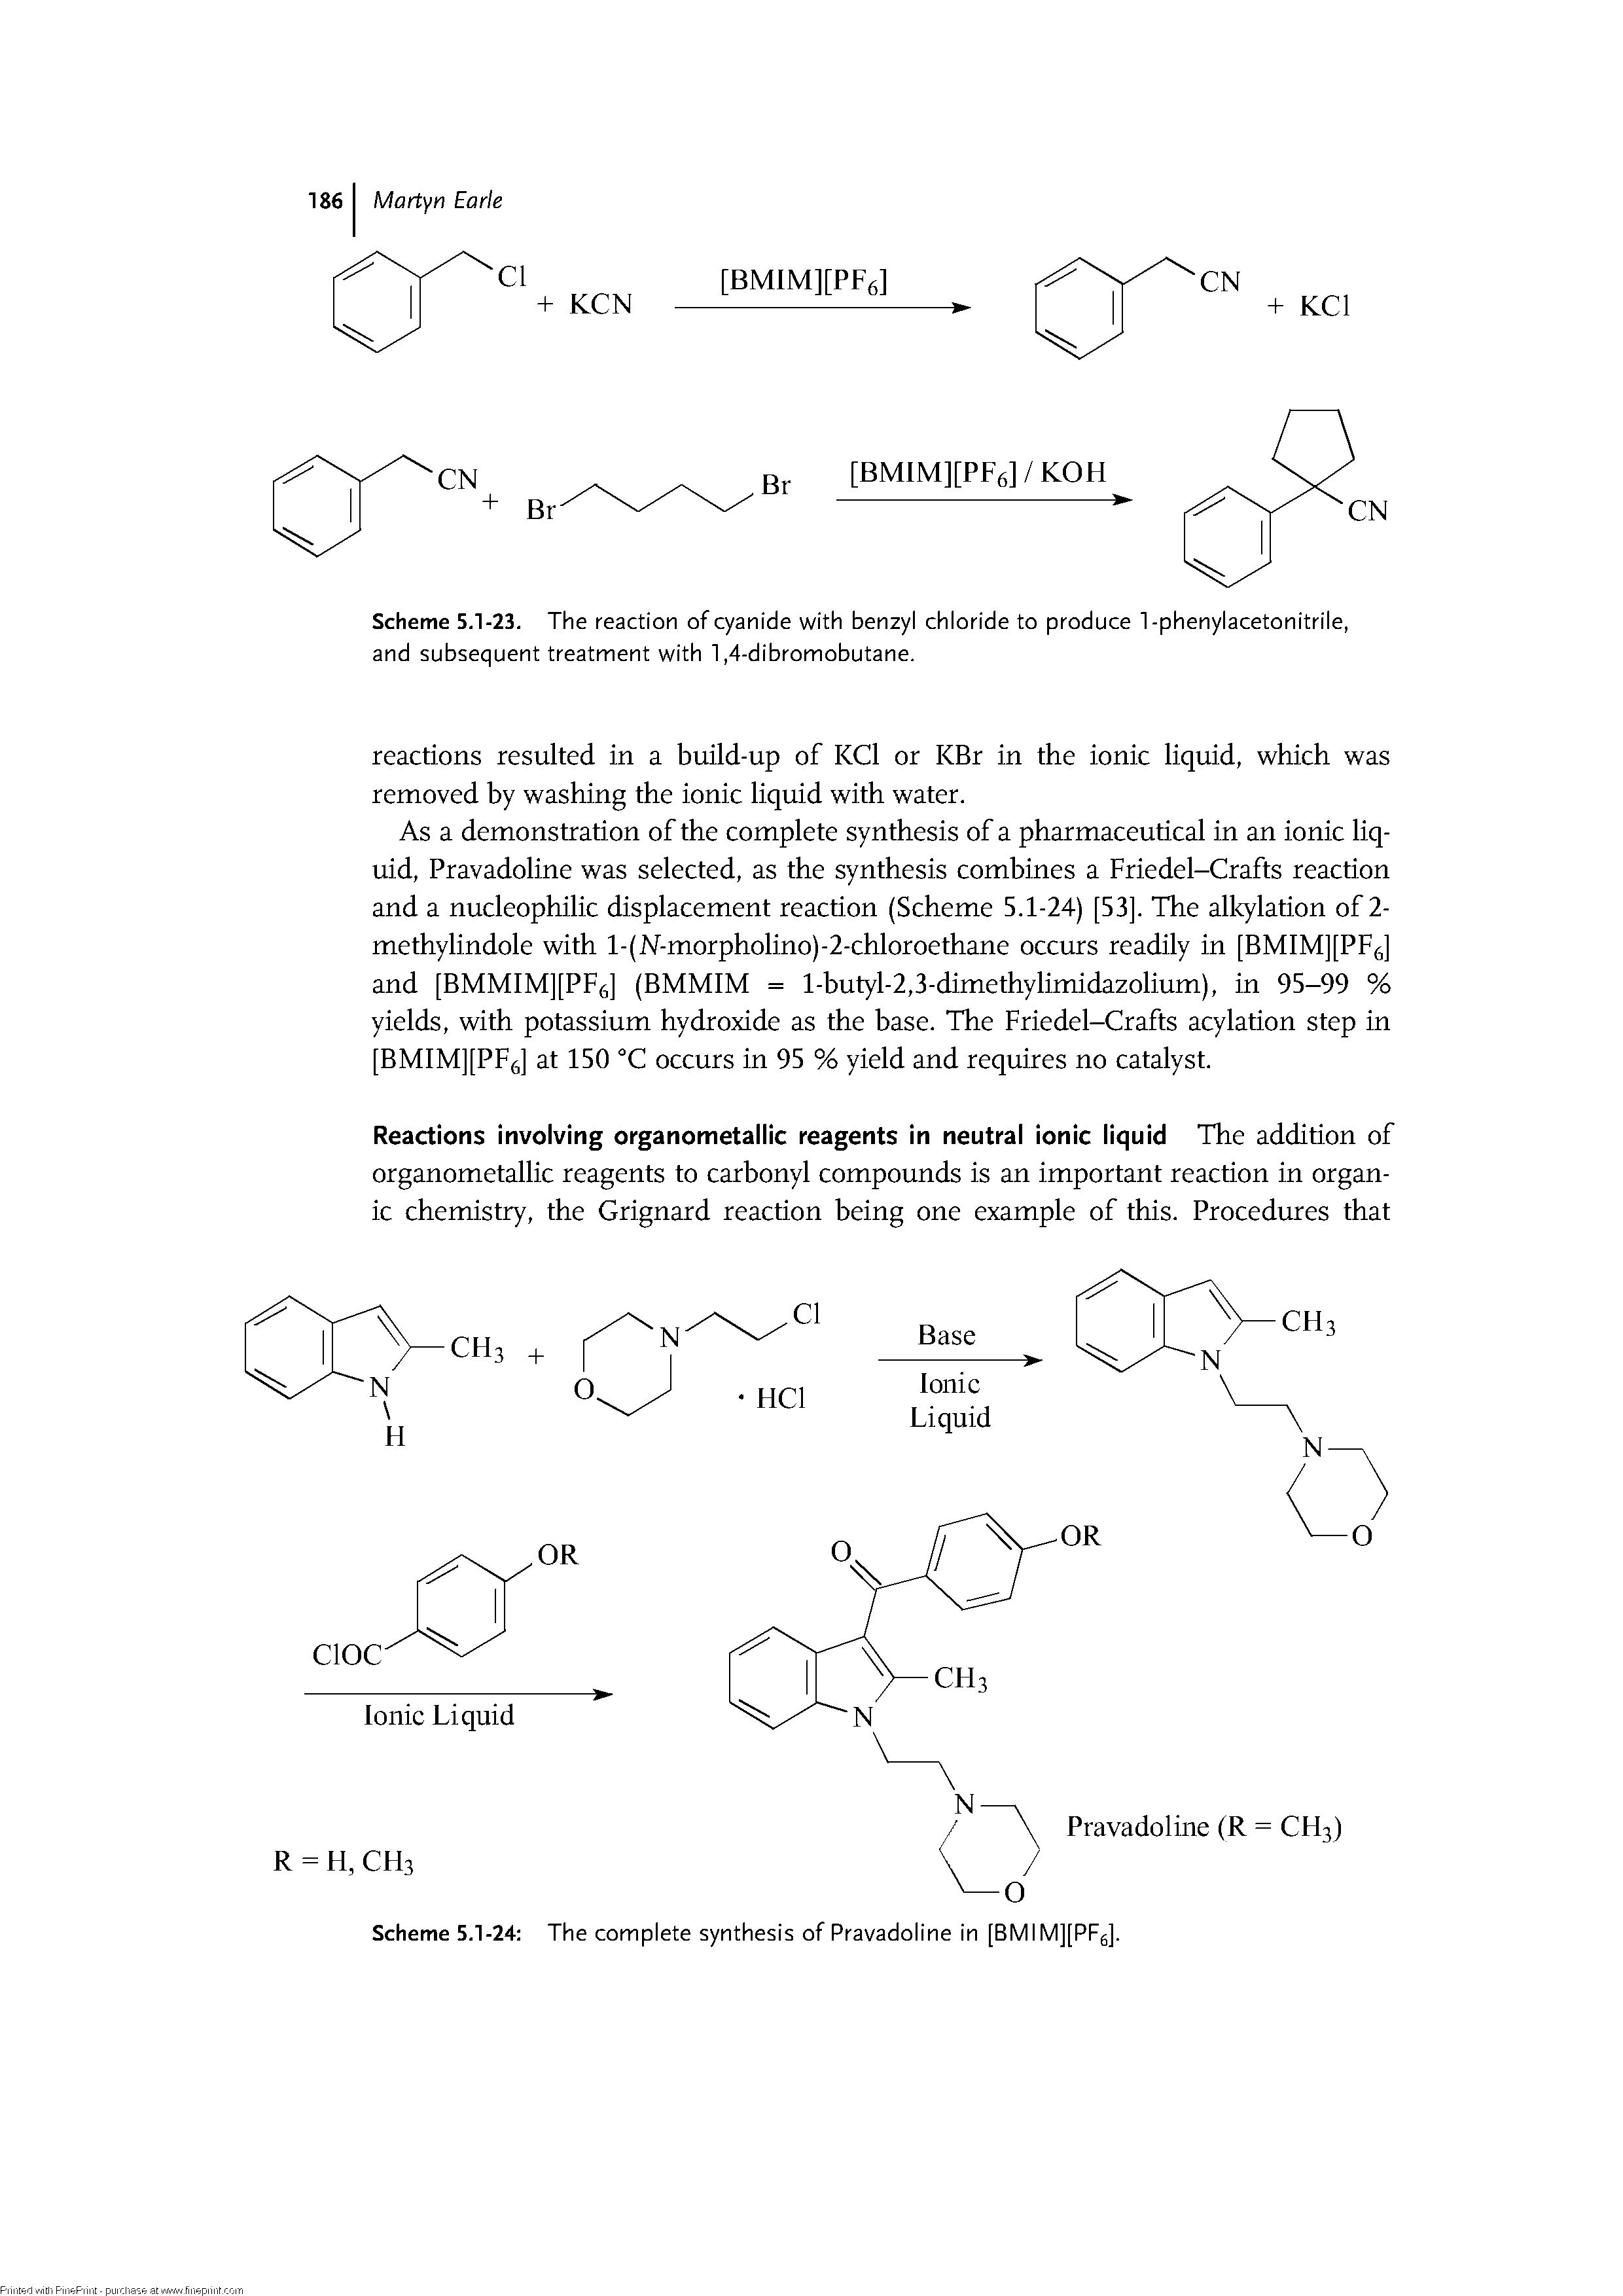 Scheme 5.1-24 The complete synthesis of Pravadoline in [BMIM][PFgj.